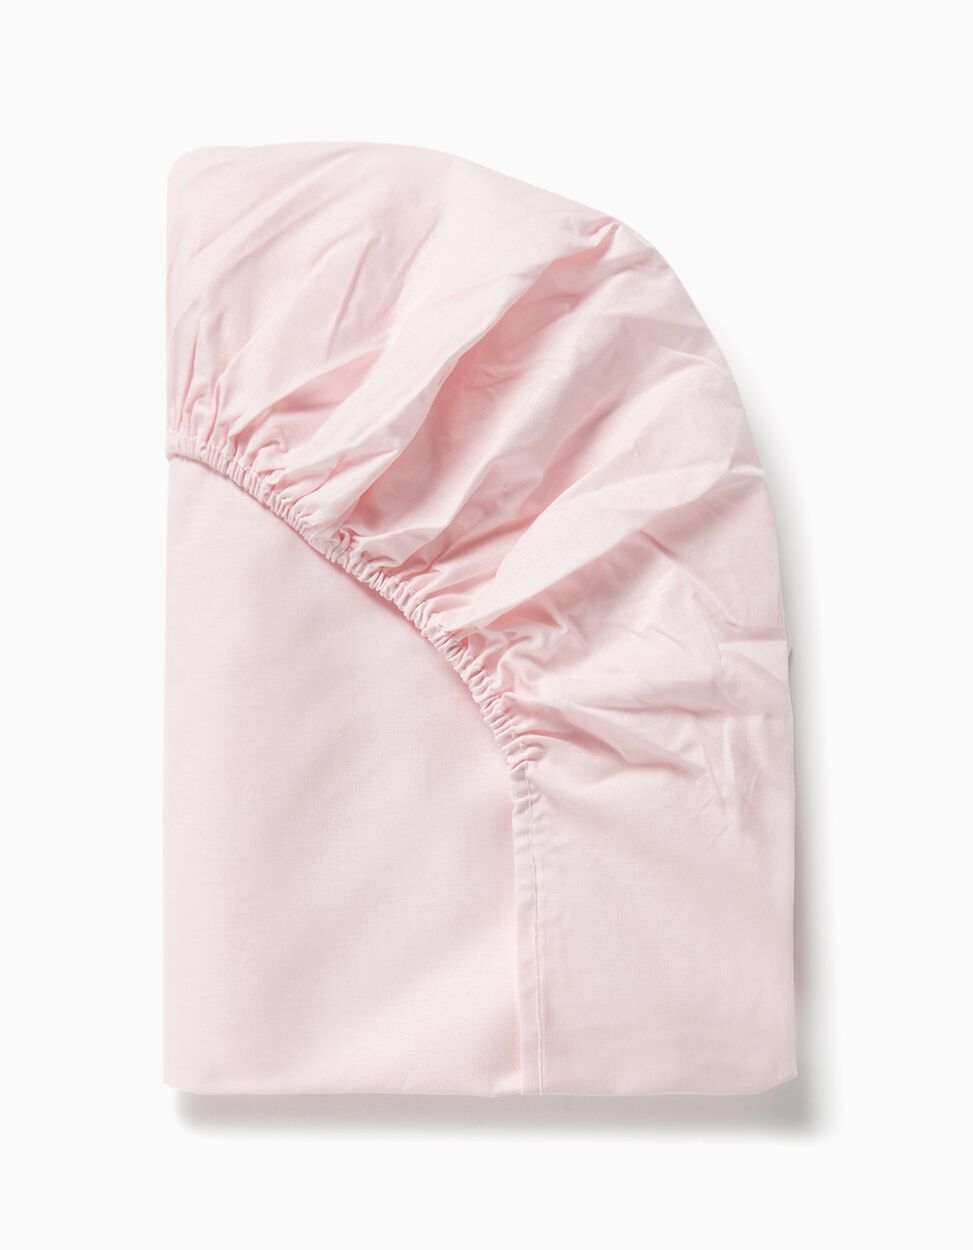 Adjustable Sheet 80x55cm Interbaby, Pink